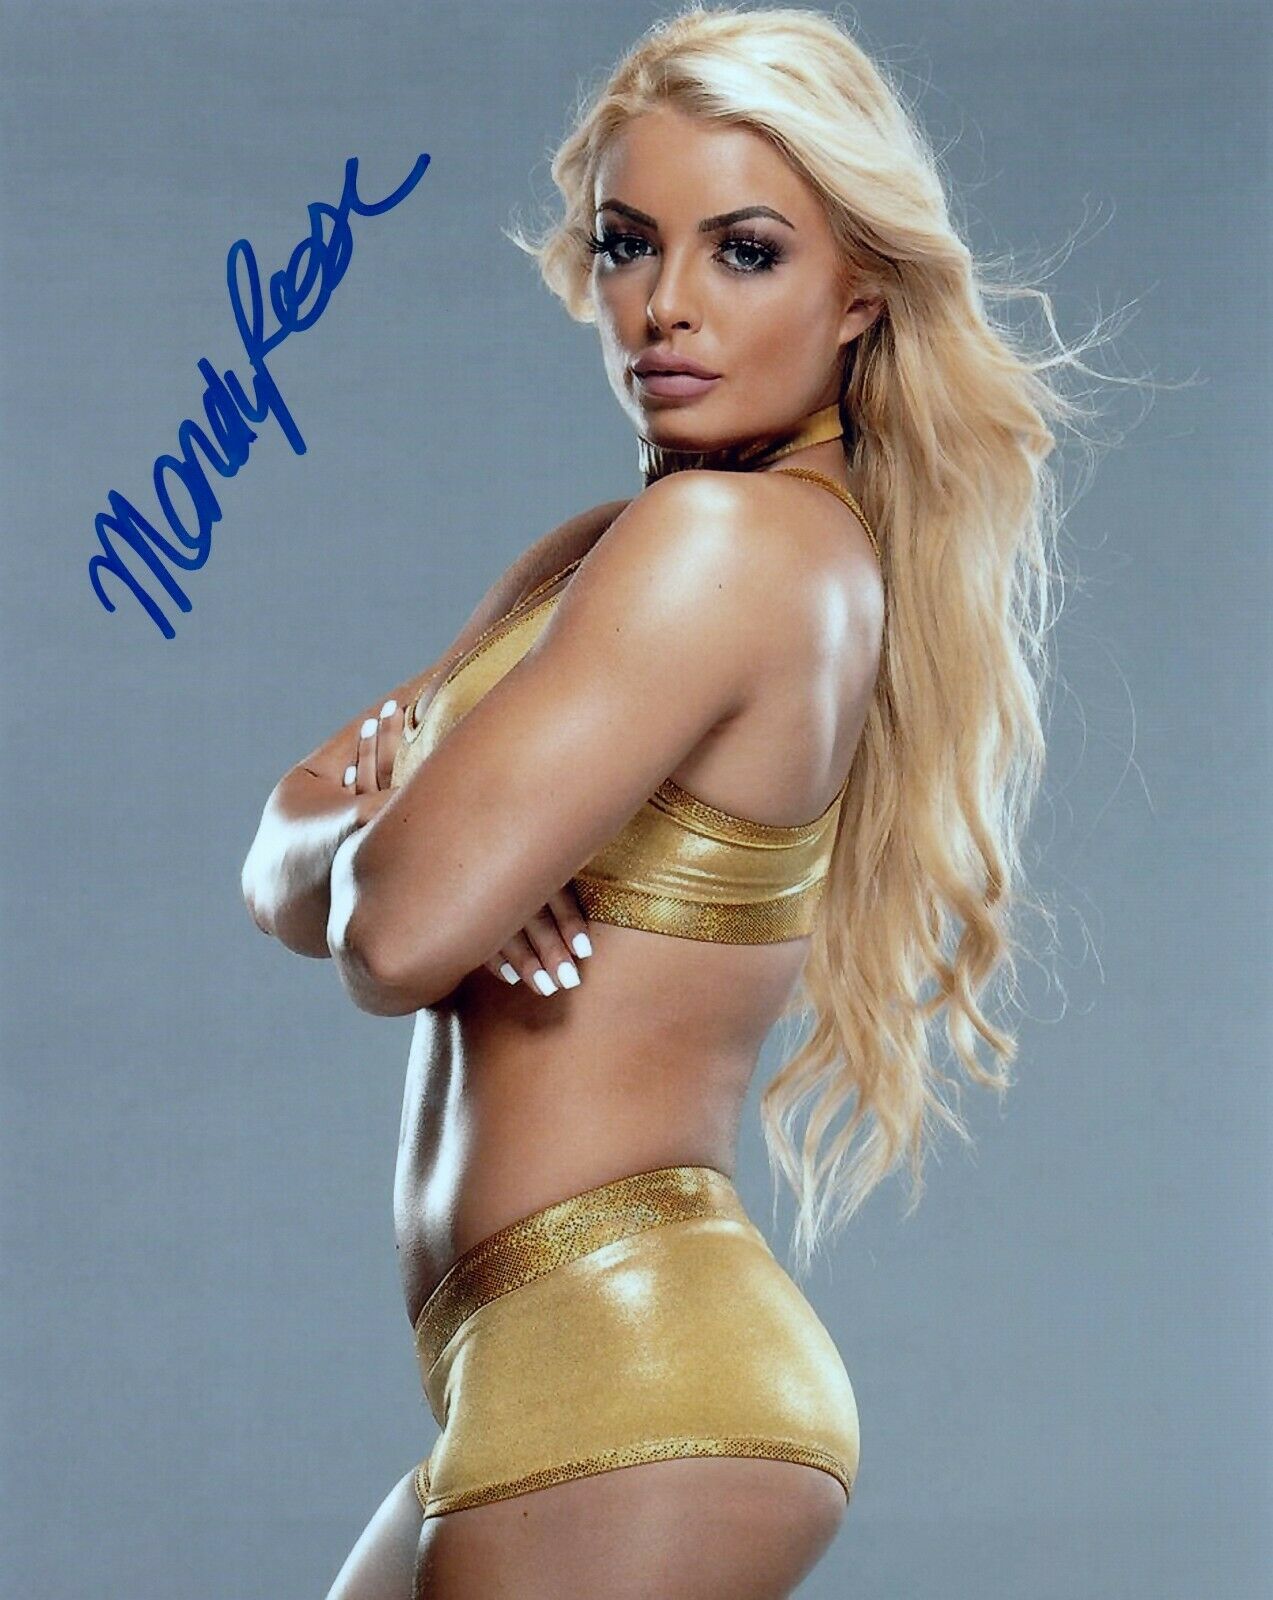 MANDY ROSE WWE NXT WRESTLER Autograph Signed 8x10 Photo #51 FITNESS MODEL